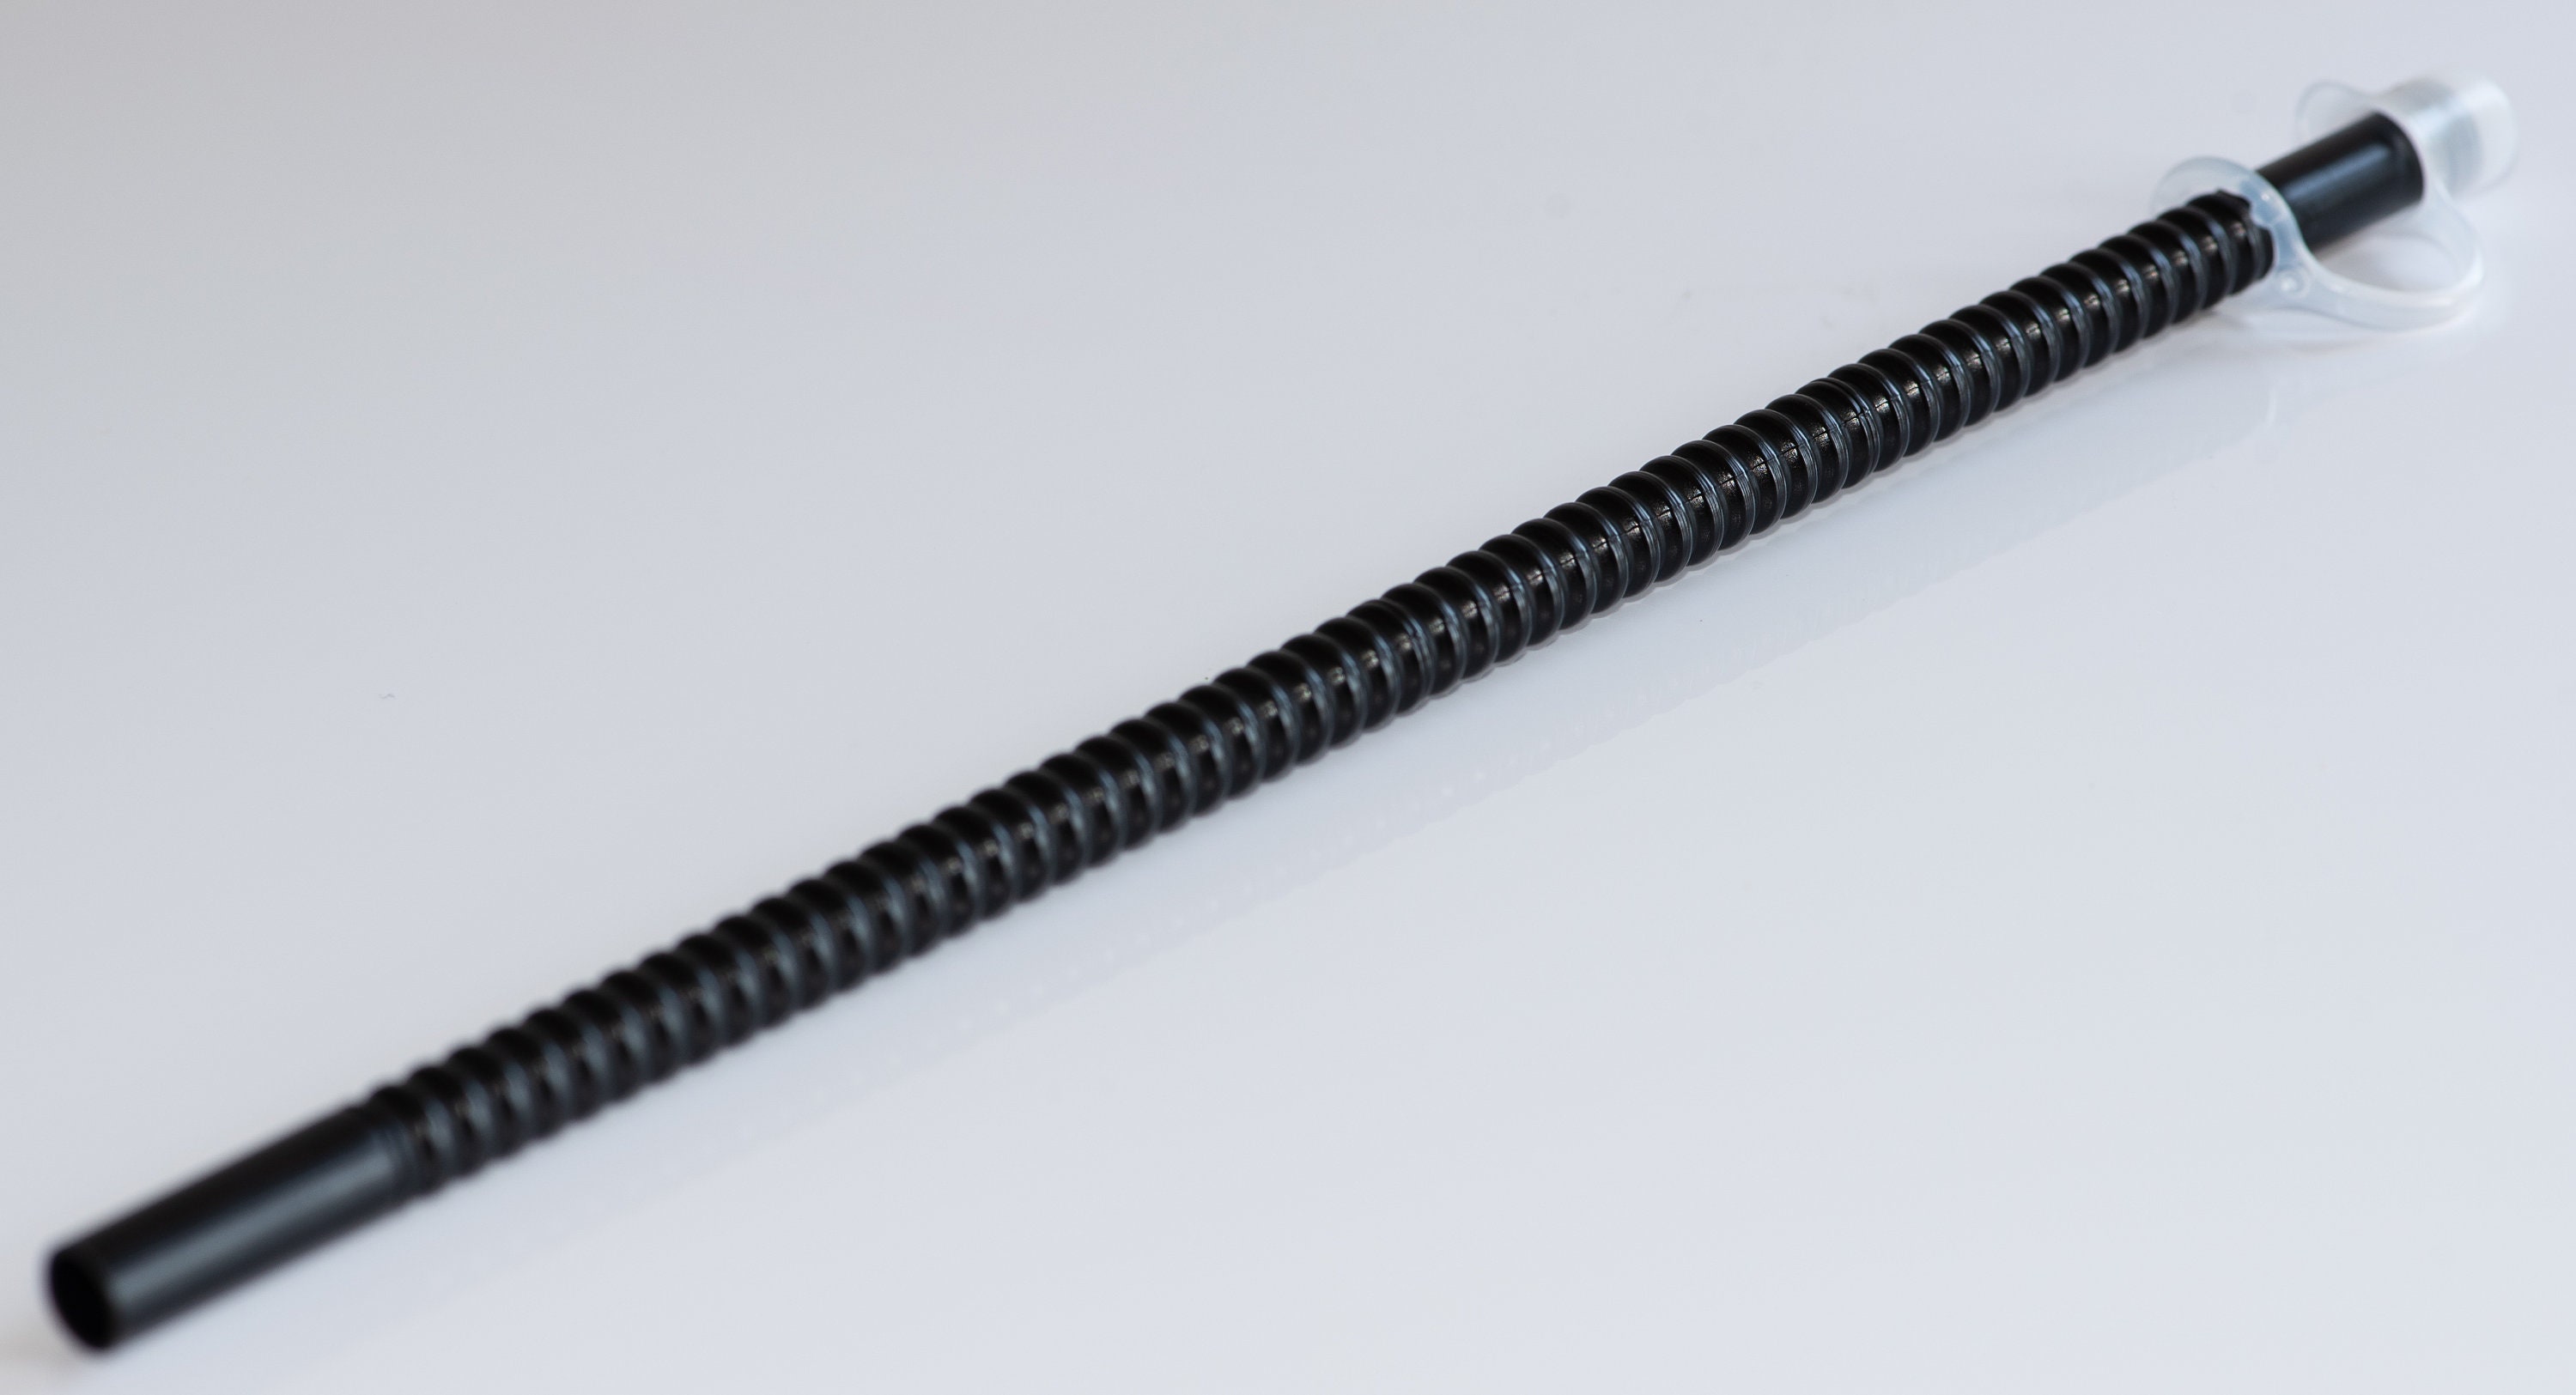 Flexible Stainless Steel Straw Turtleneck® Straw (50 pieces)